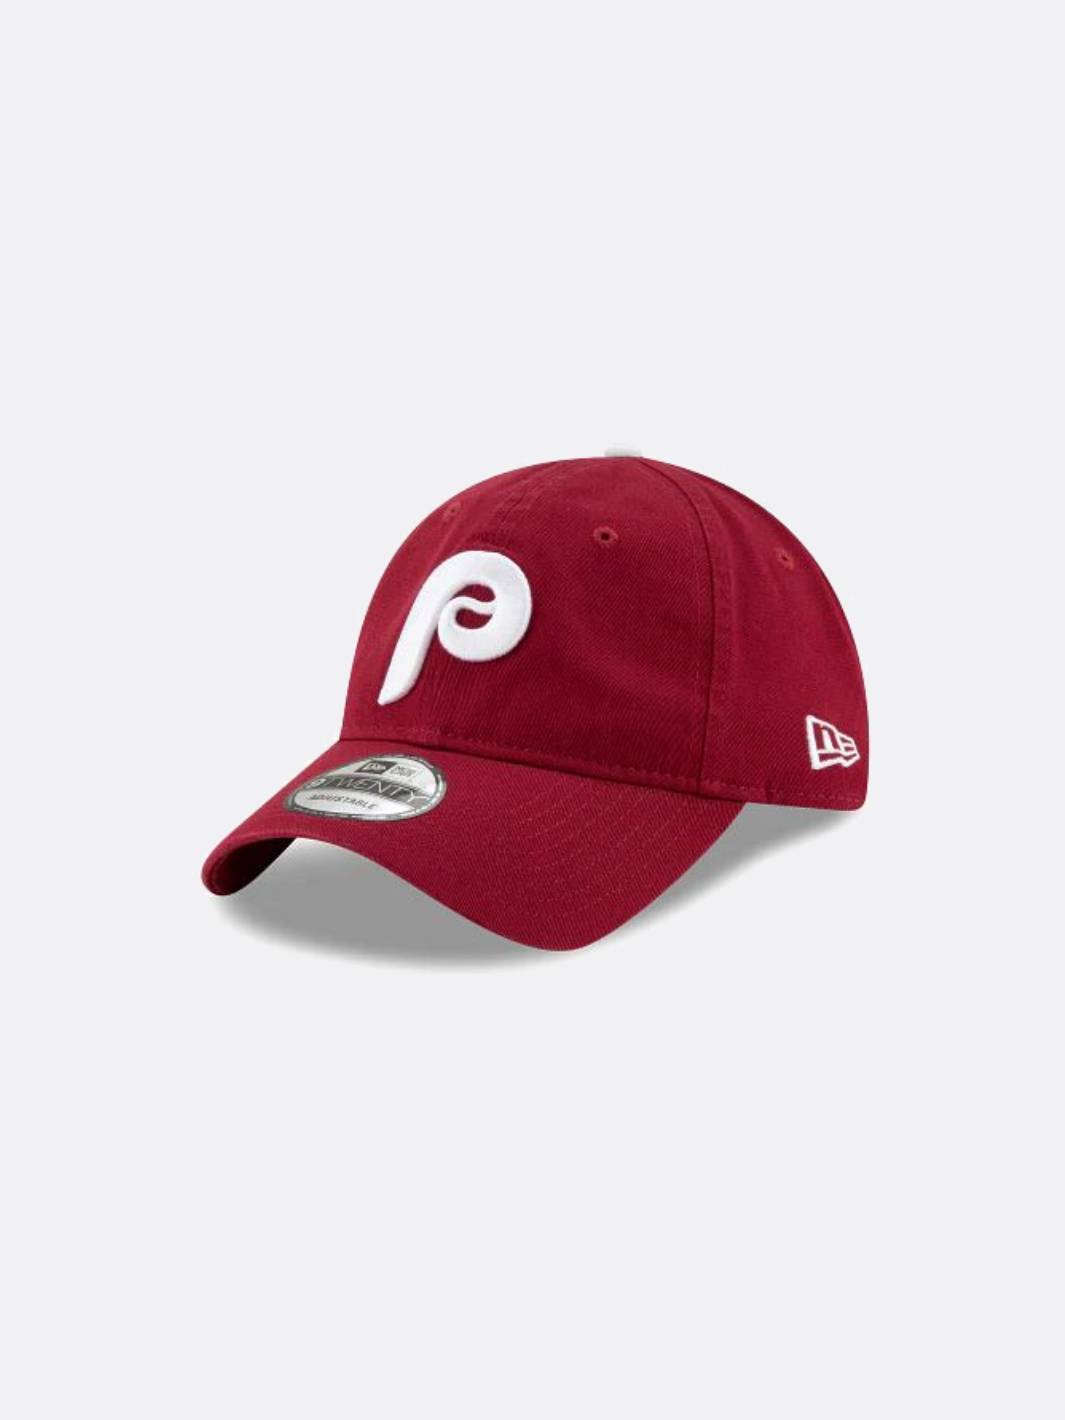 New Era, Accessories, Retro Throwback Phillies Hat